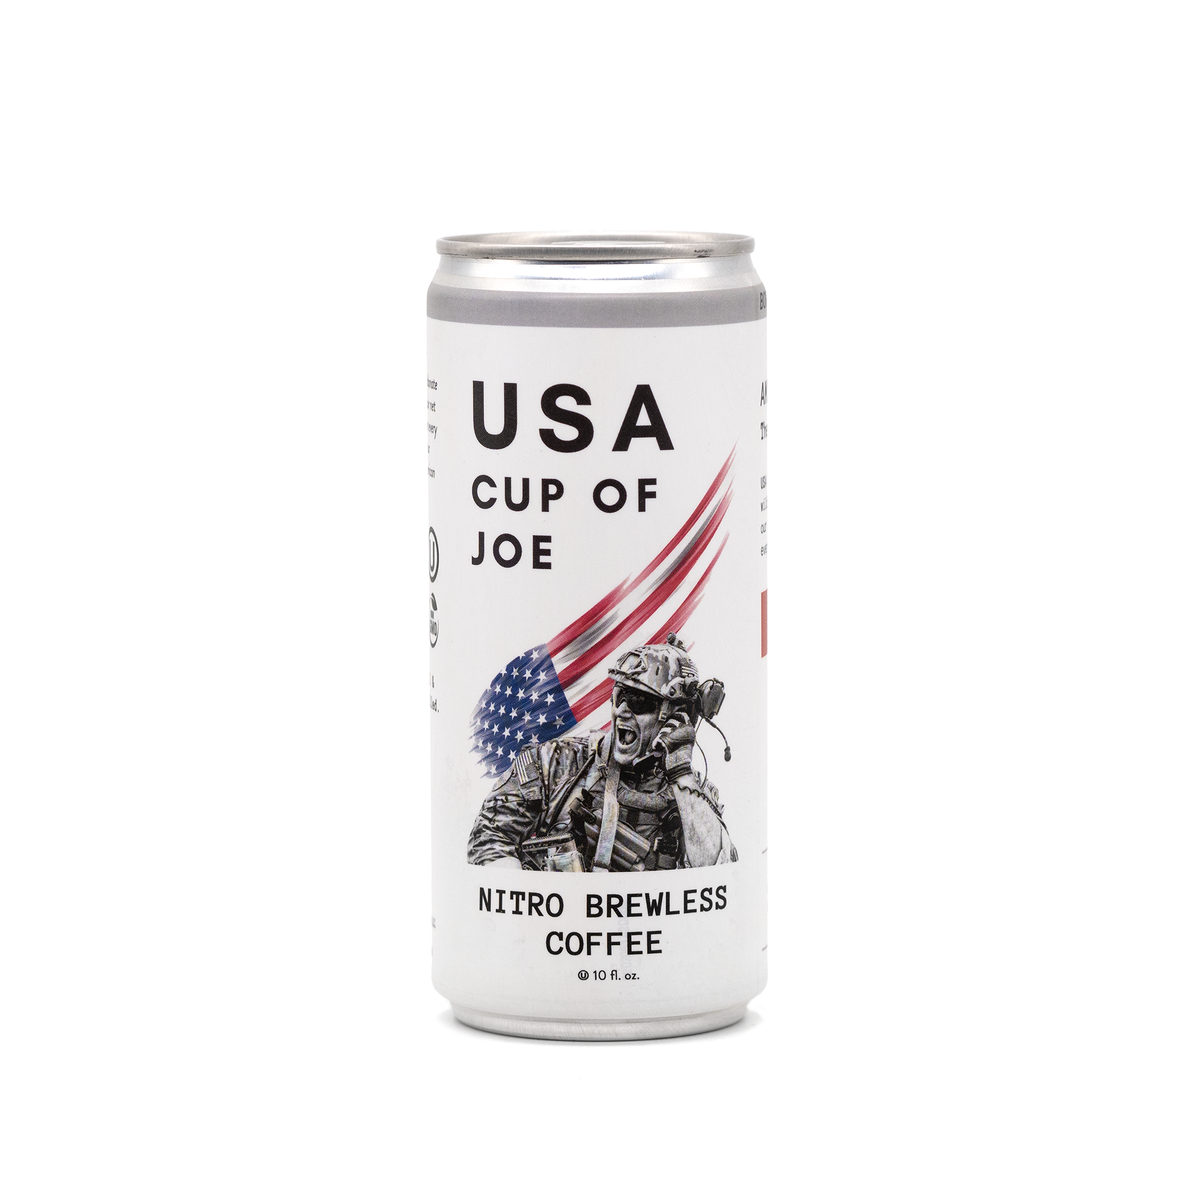 NITRO COLD BREWLESS COFFEE DRINK WHOLESALE COFFEE SUPPLIER | AMERICAS COFFEE: USA CUP OF JOE